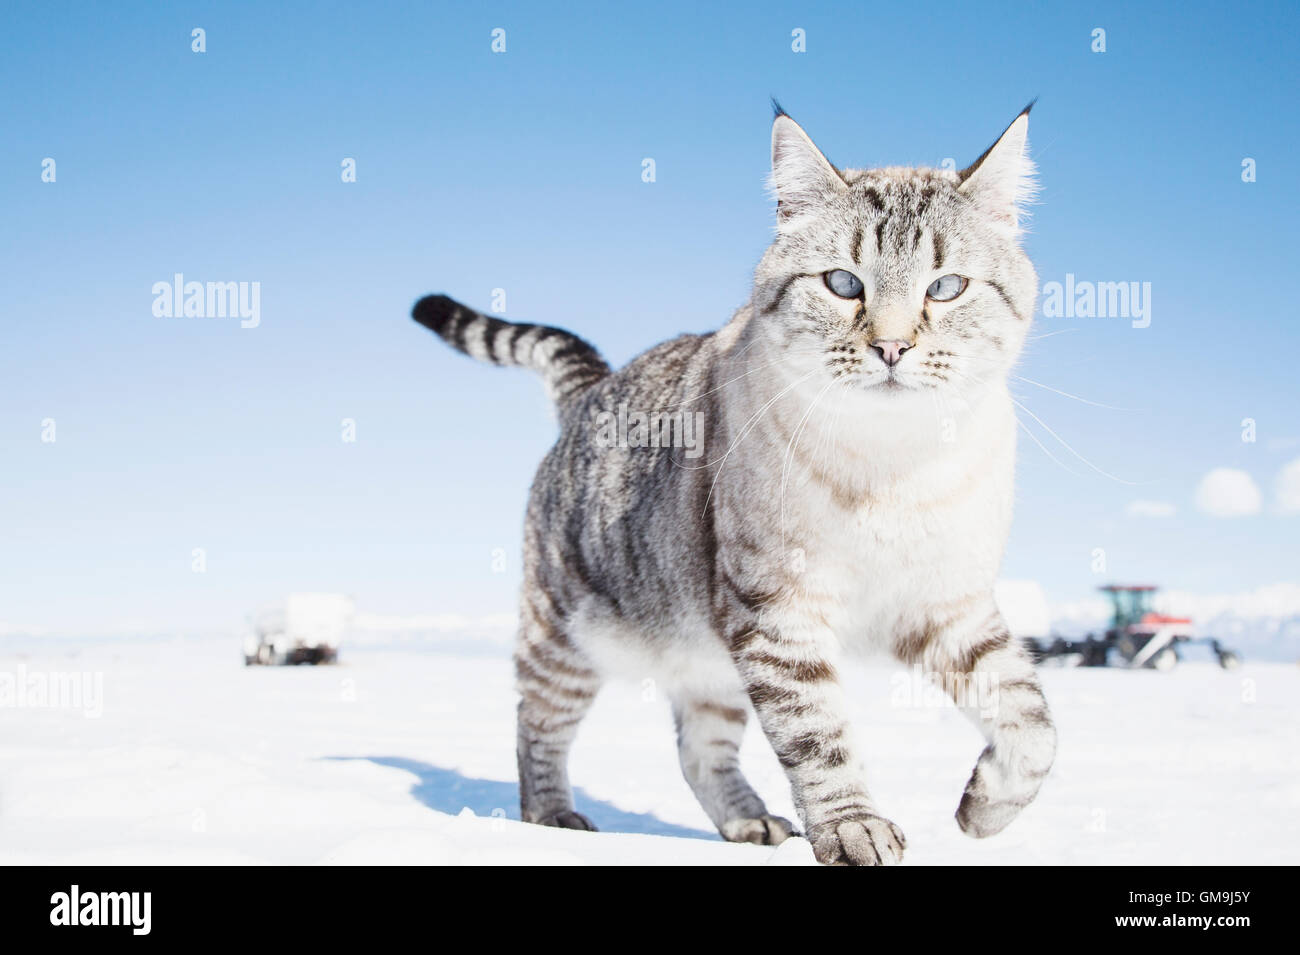 Cat walking on snow Stock Photo